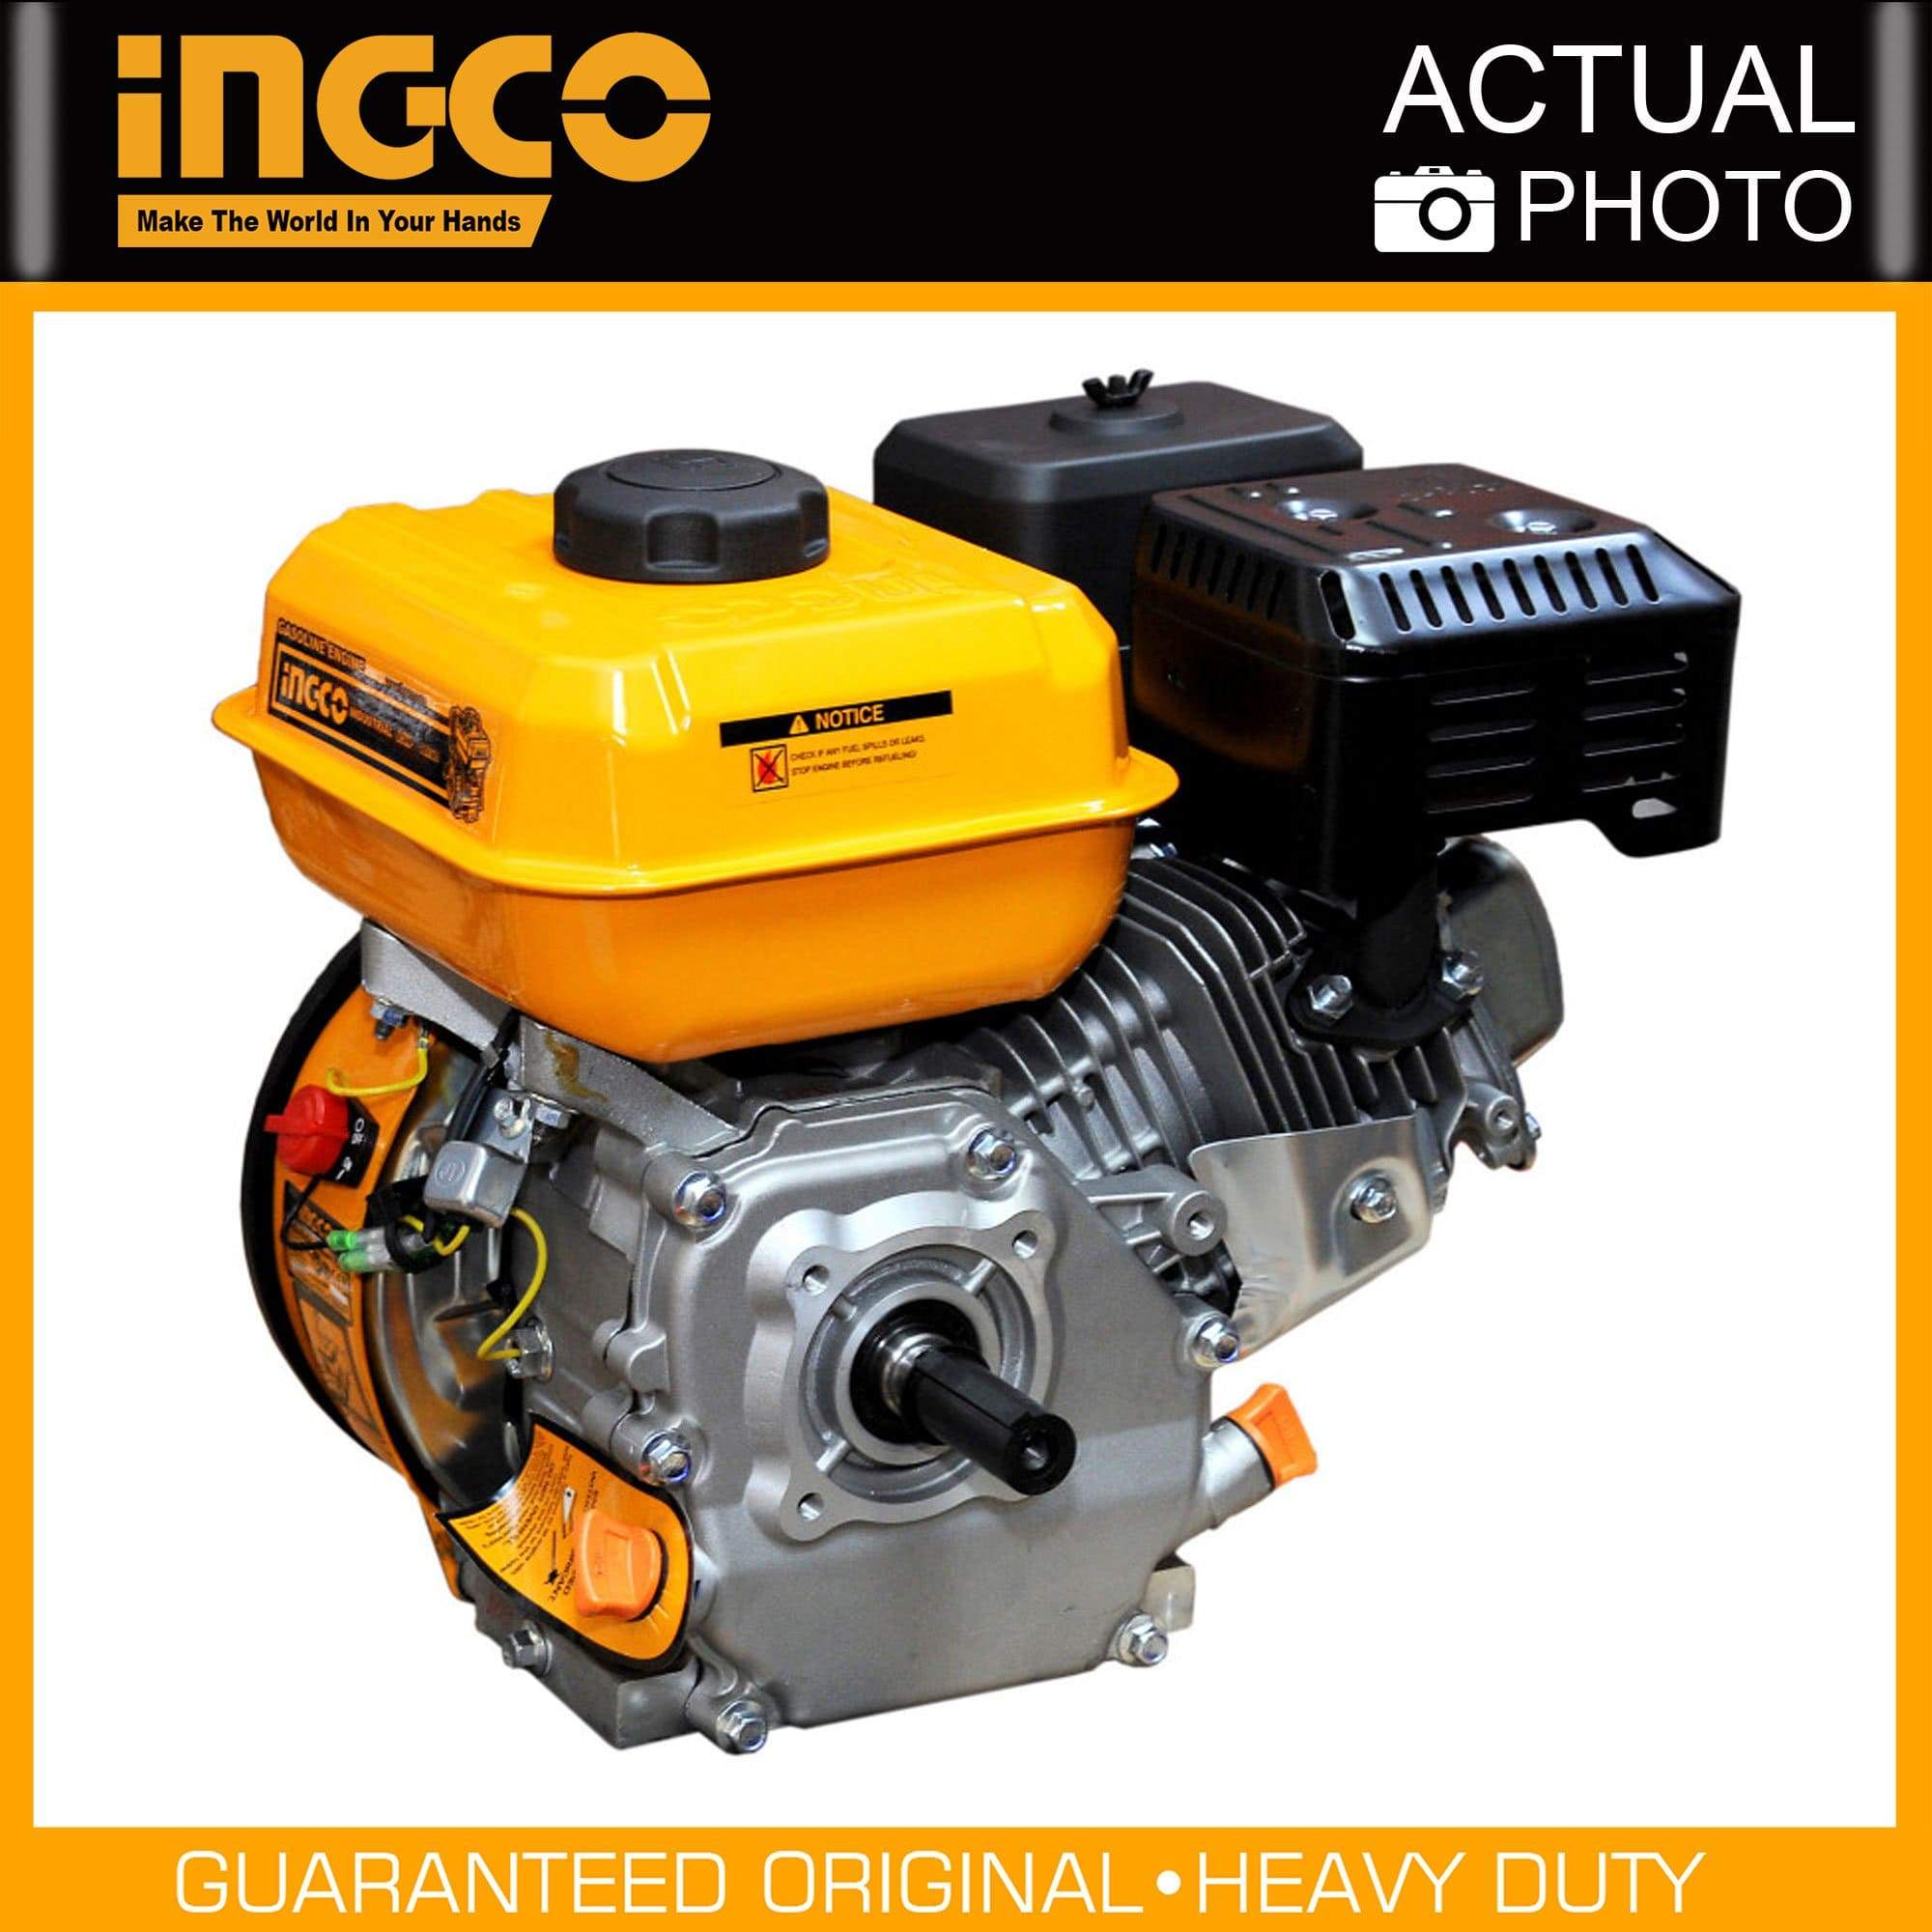 Ingco Gasoline Engine 6.5HP - GEN1682 | Supply Master | Accra, Ghana Tools Building Steel Engineering Hardware tool